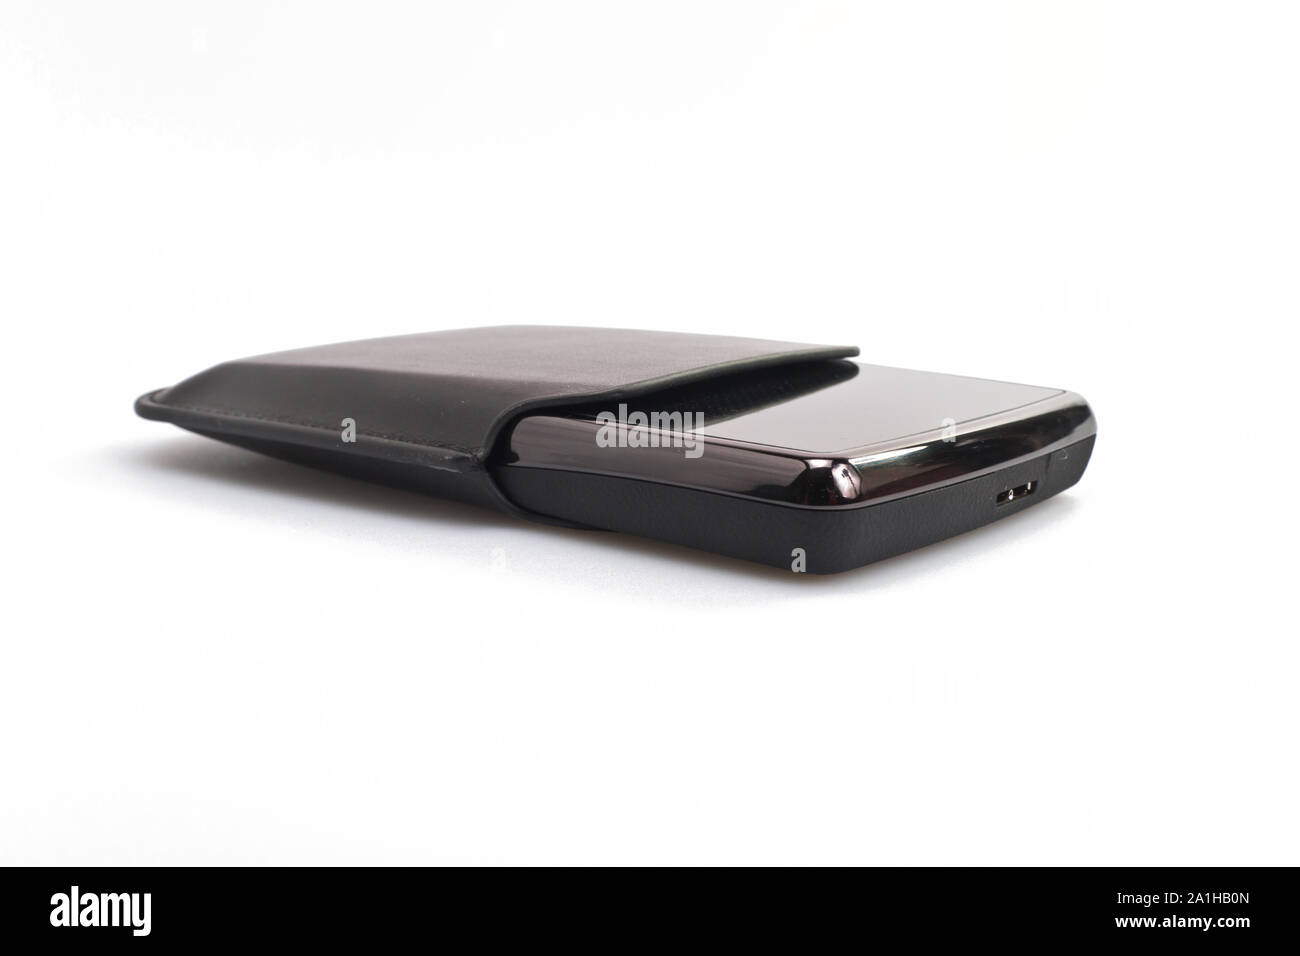 Black portable harddisk with soft leather case on white background Stock Photo